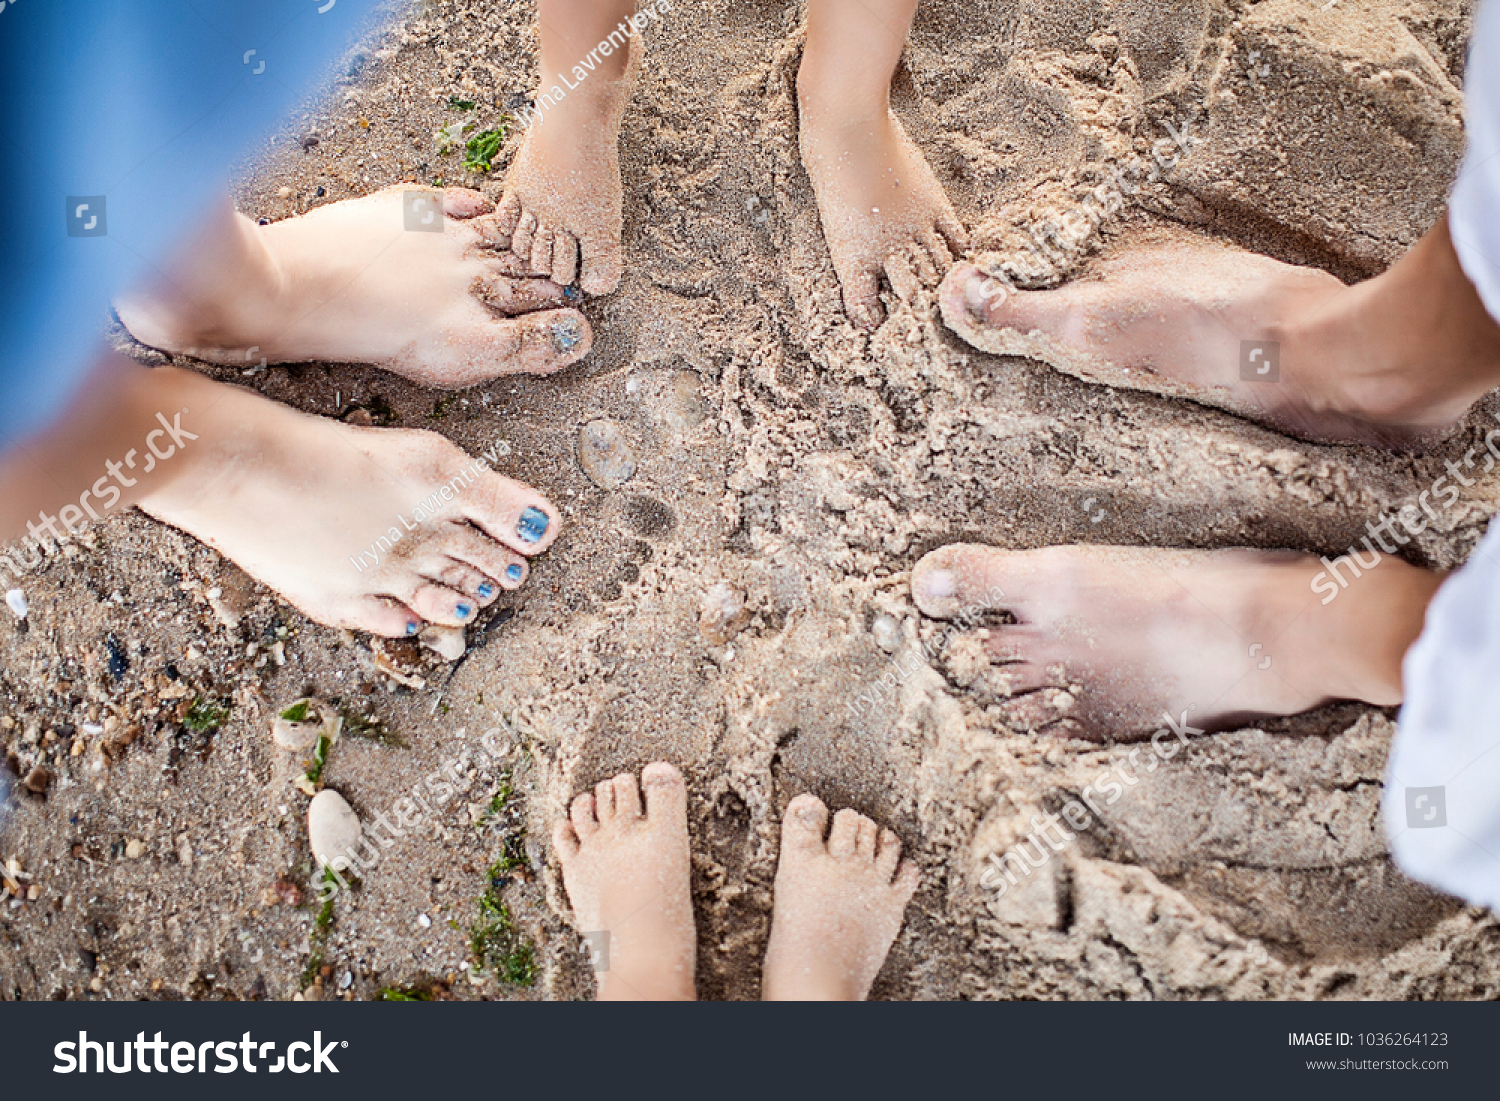 Naked family pics Naked Family Feet Summer On Sand Stock Photo Edit Now 1036264123